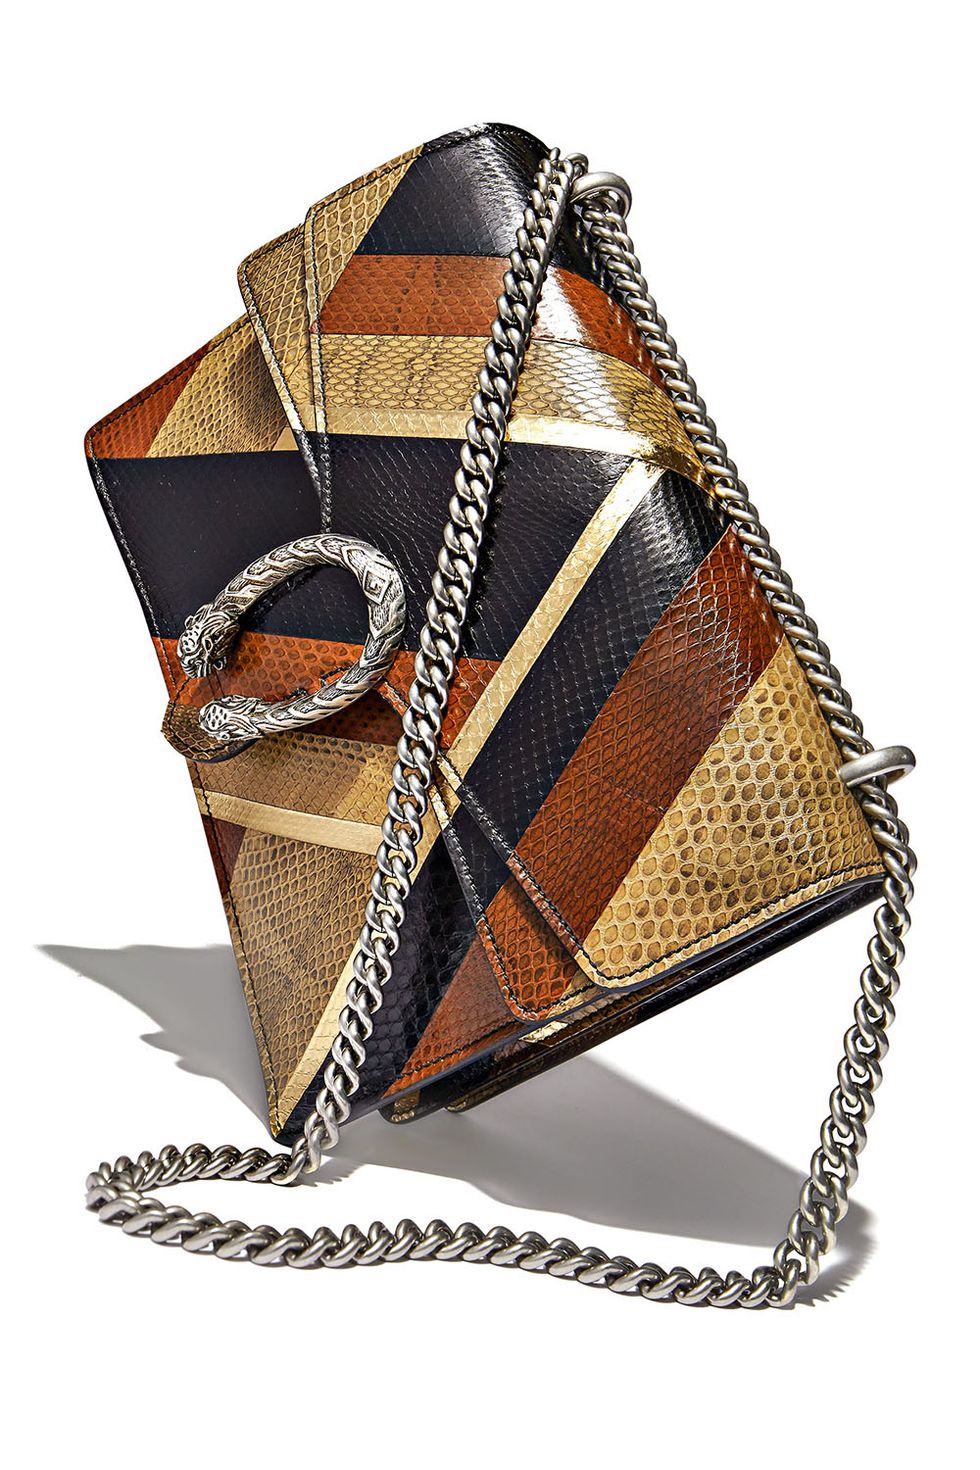 <p><em>Gucci handbag, $5,800, <strong><a href="https://shop.harpersbazaar.com/designers/g/gucci/ayers-watersnake-handbag-7832.html" target="_blank">shopBAZAAR.com</a></strong>. </em></p>